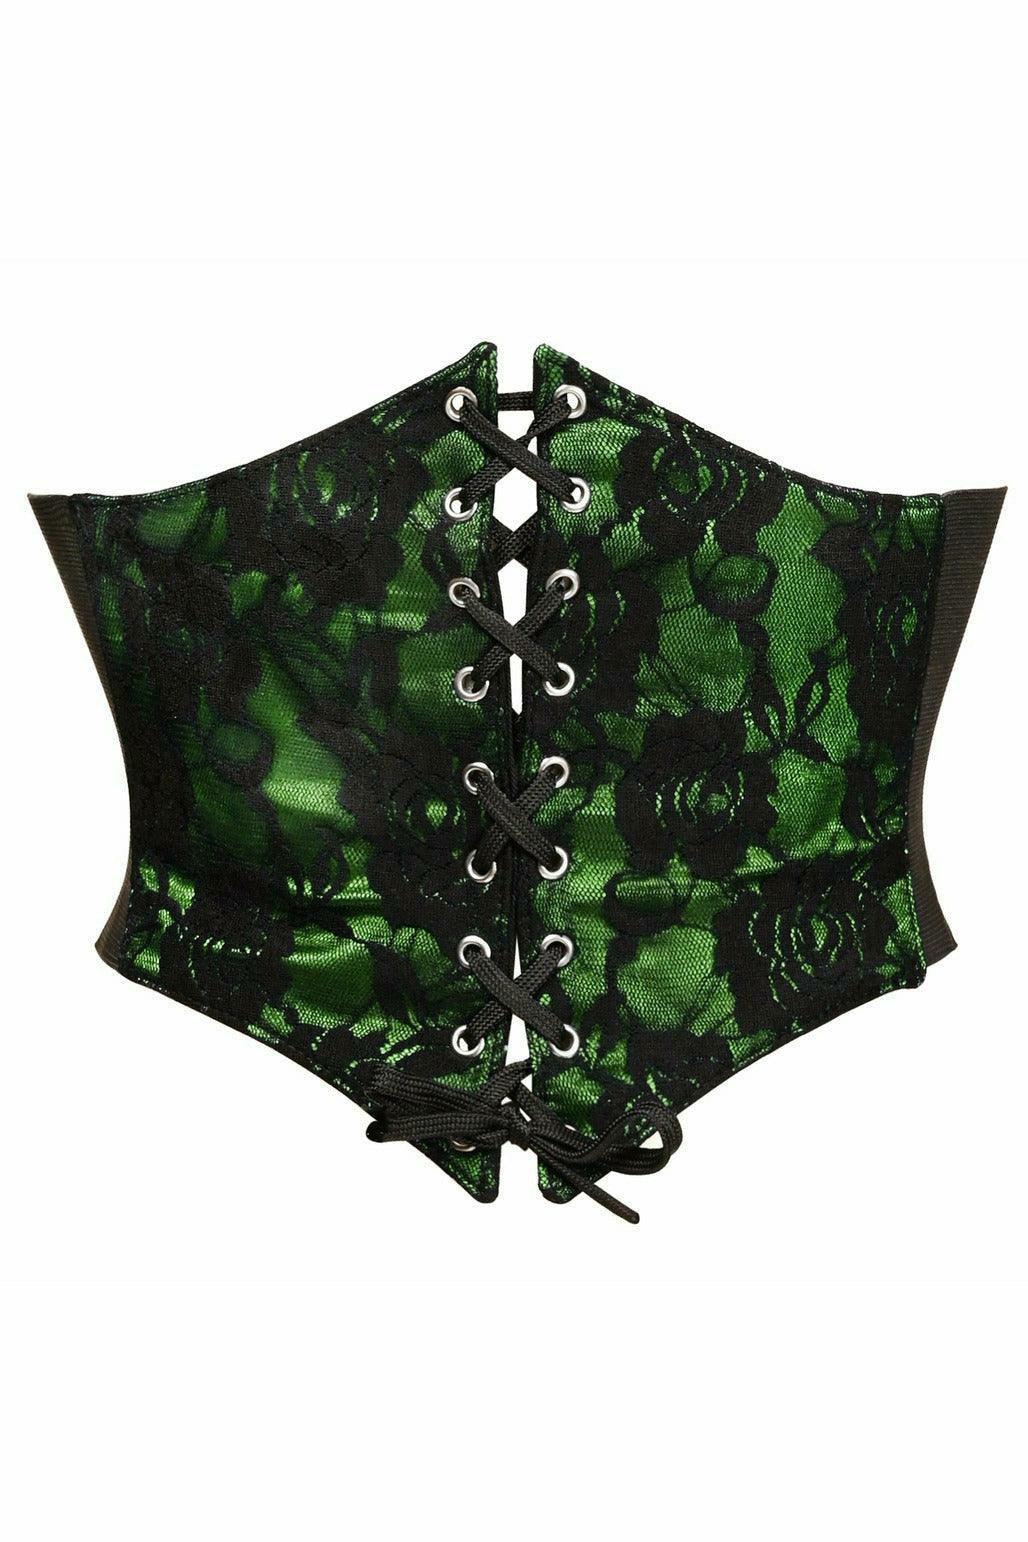 Lavish Green w/Black Lace Overlay Corset Belt Cincher - Flyclothing LLC